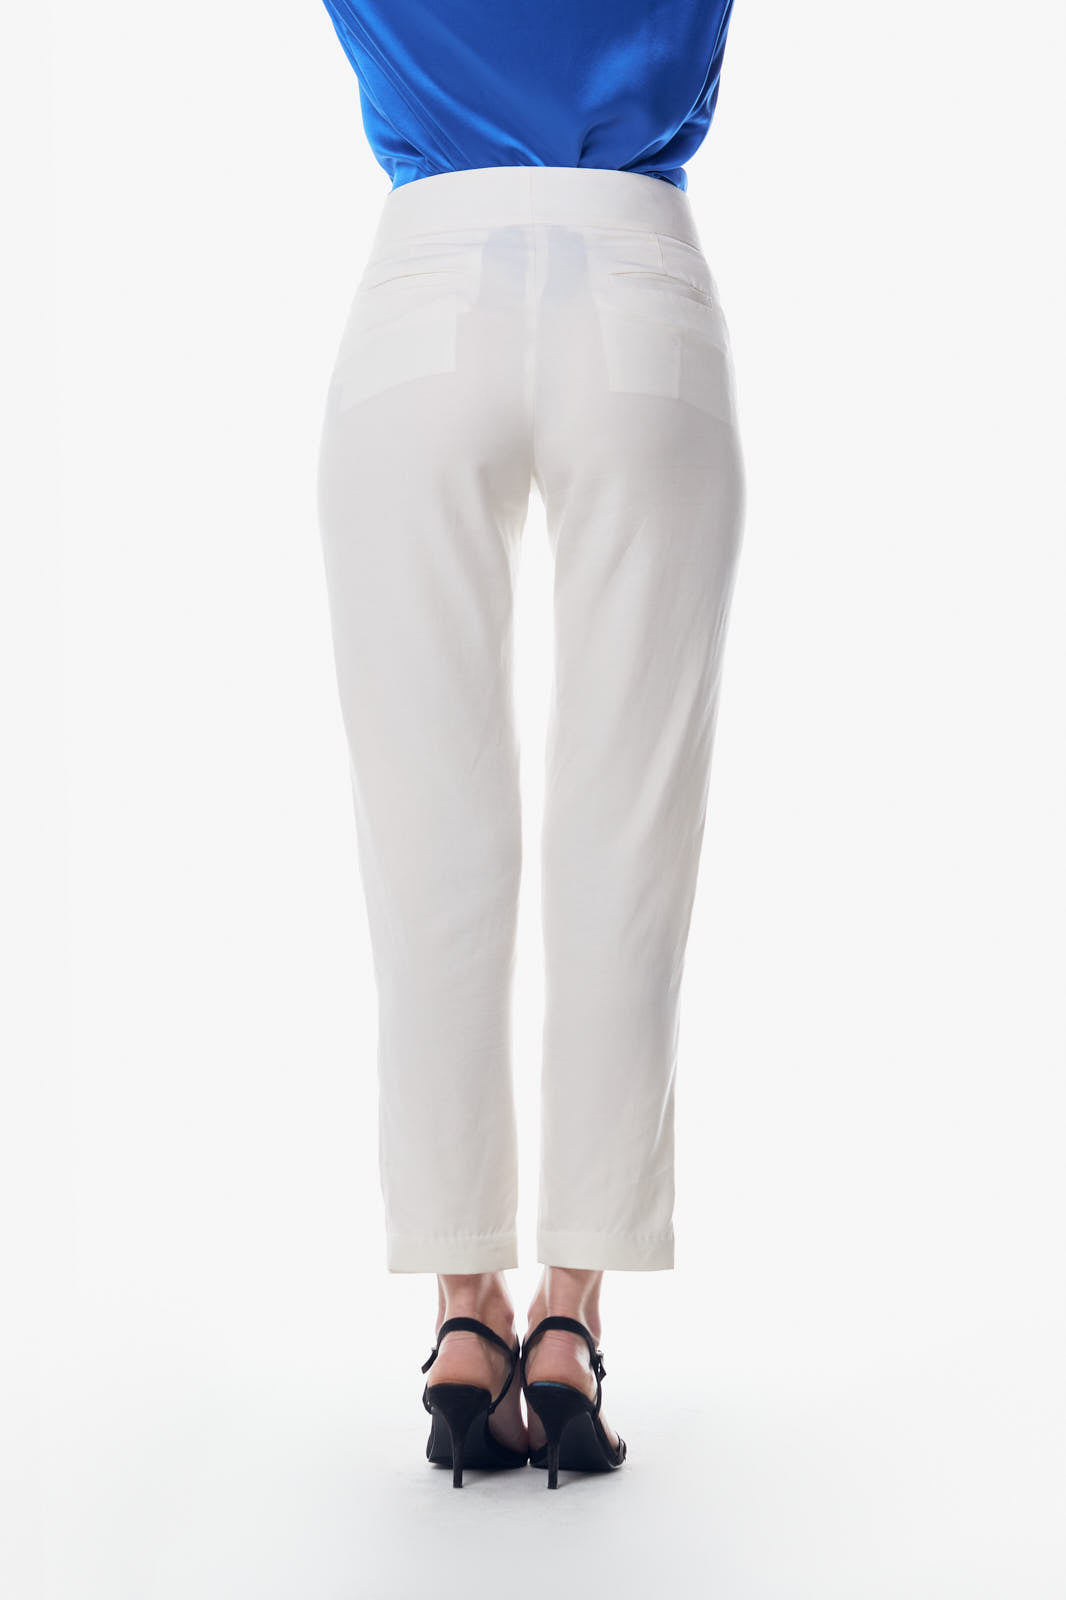 White Skinny Pants Women's Trousers